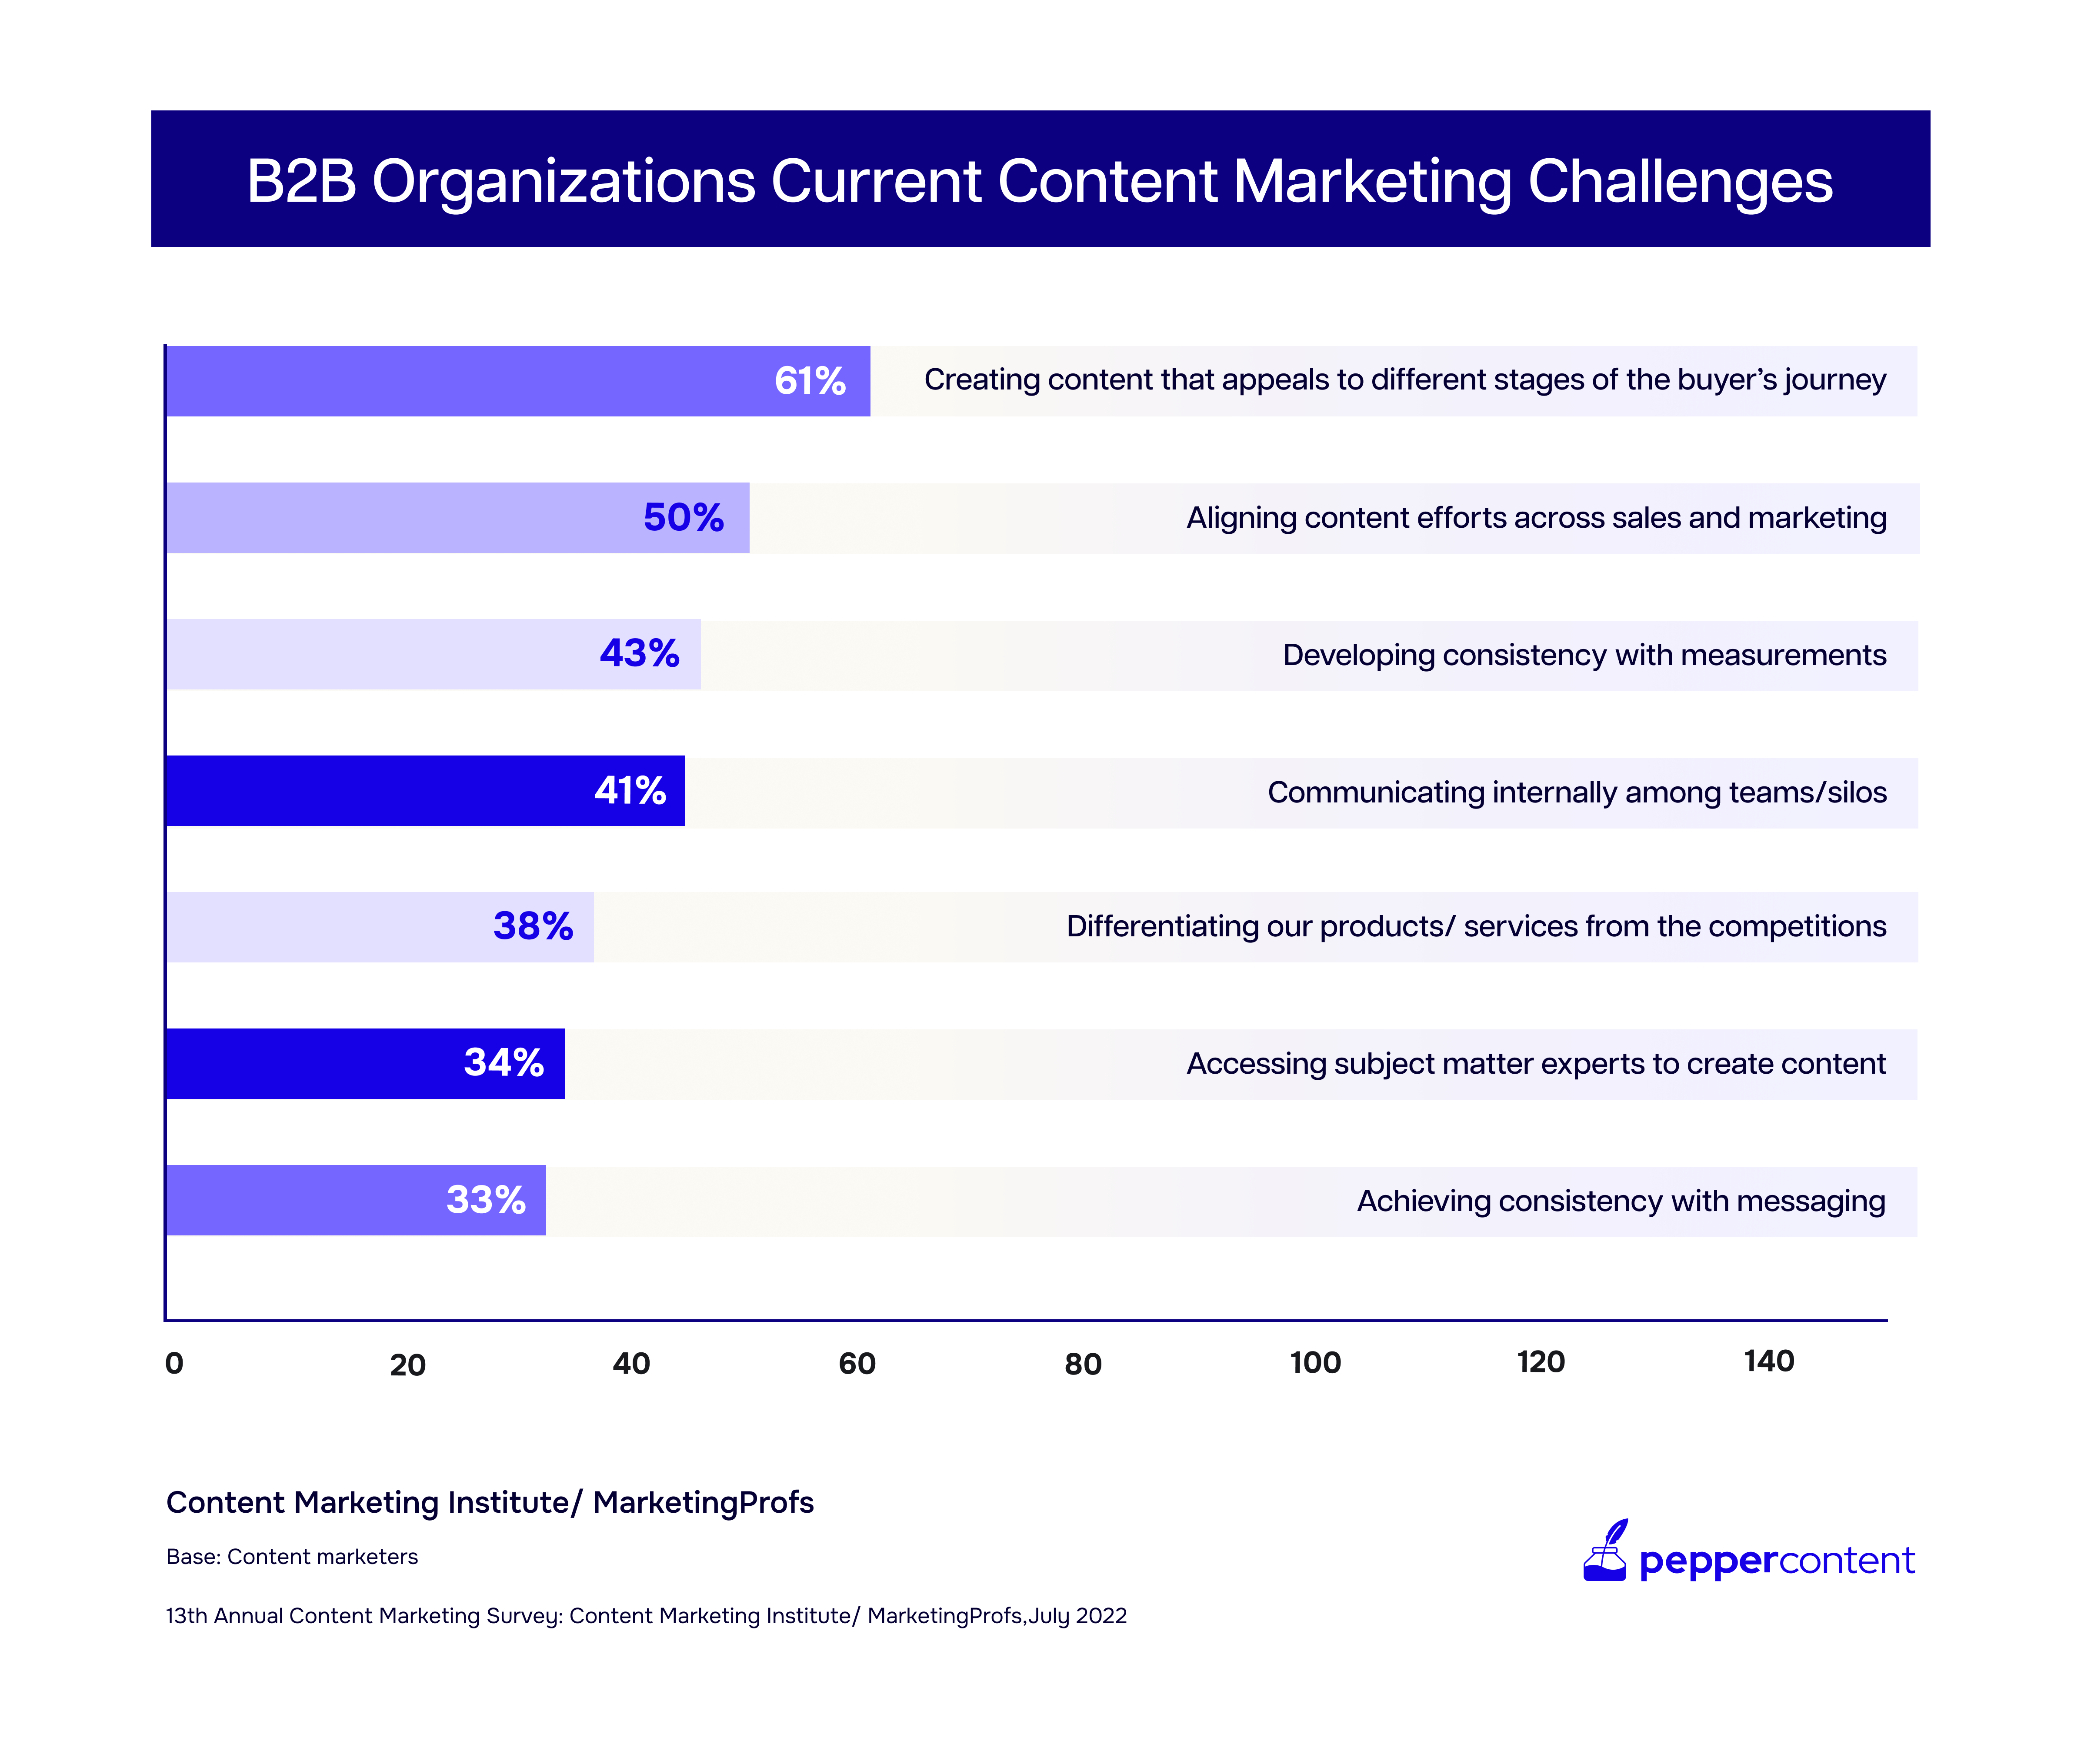 B2B Content Marketing challenges